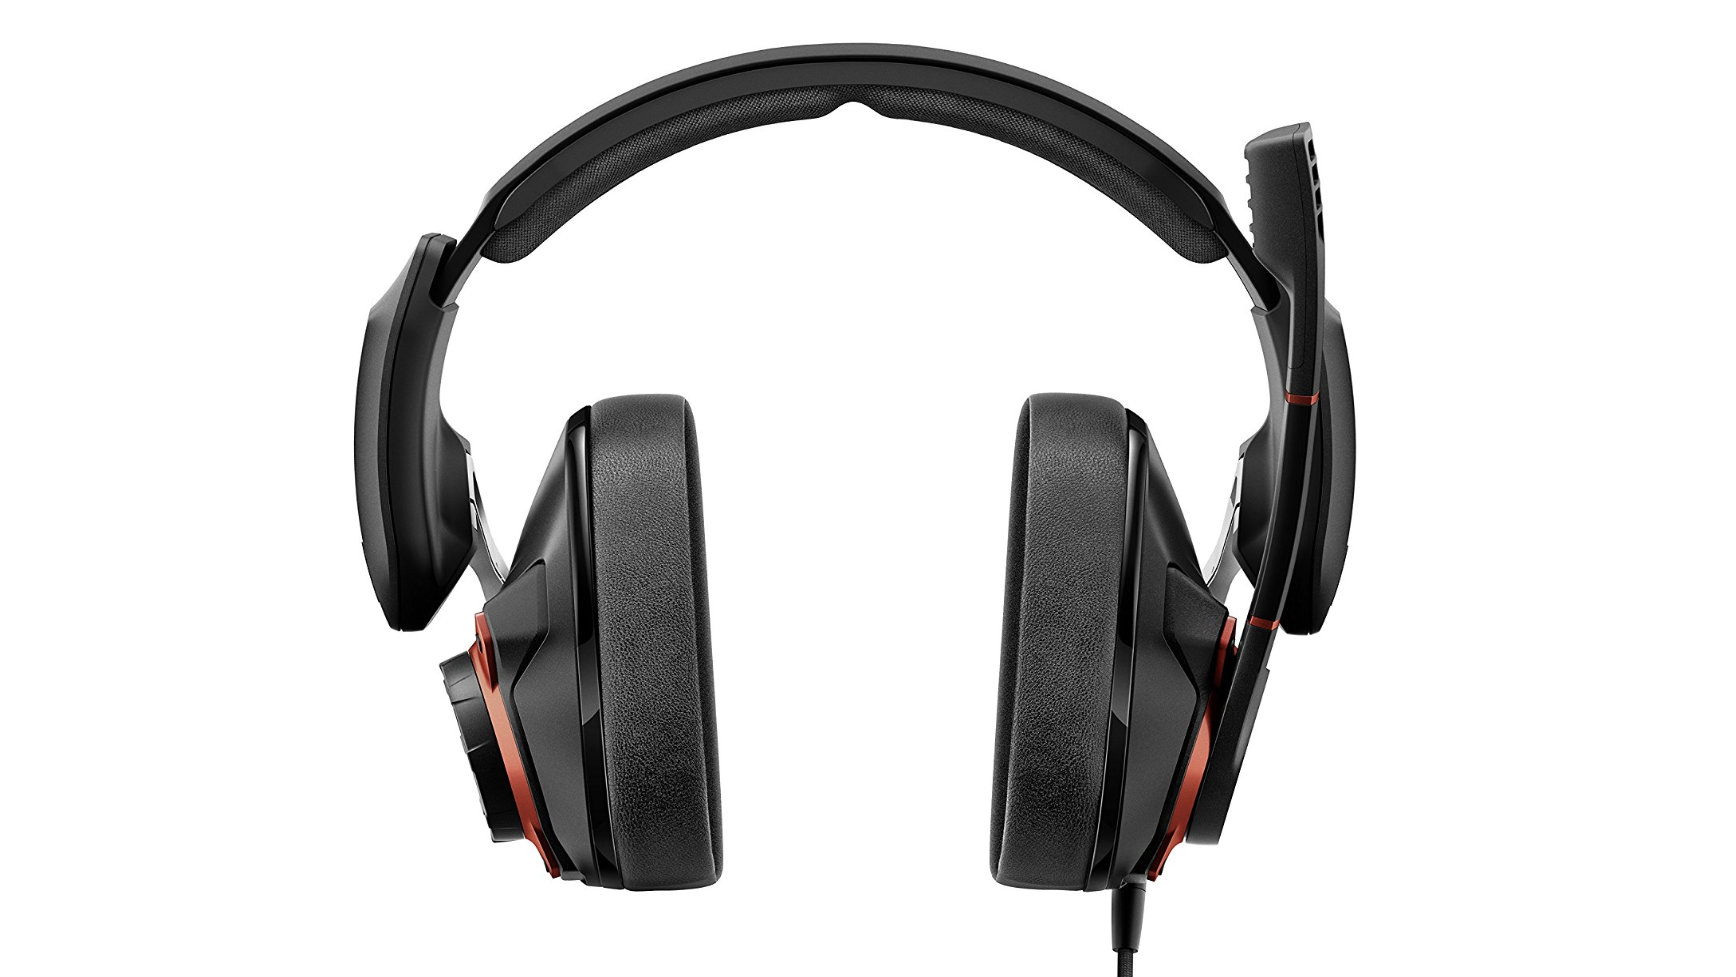 Should I buy the Sennheiser GSP 600 gaming headset? | TechRadar